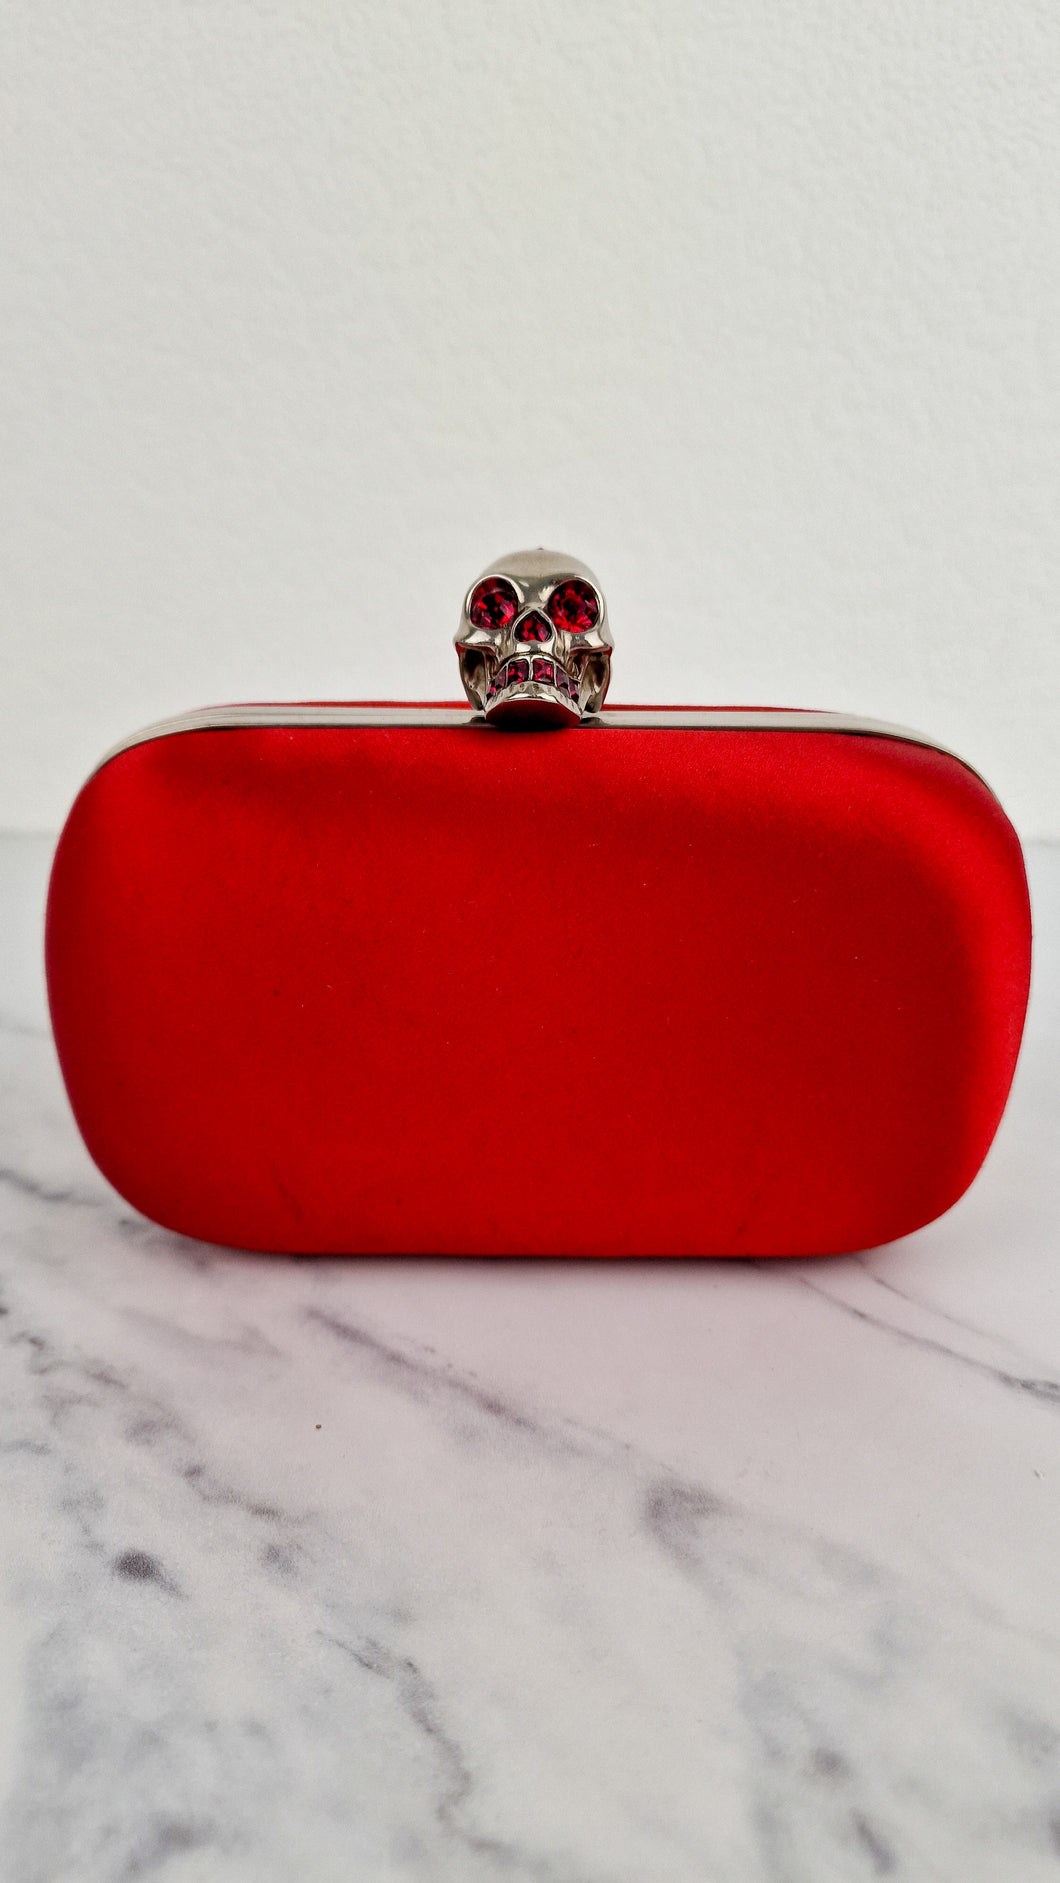 Alexander McQueen Skull Box Clutch Red Satin Heart Swarovski Crystals - Limited Edition Valentines Christmas Bag